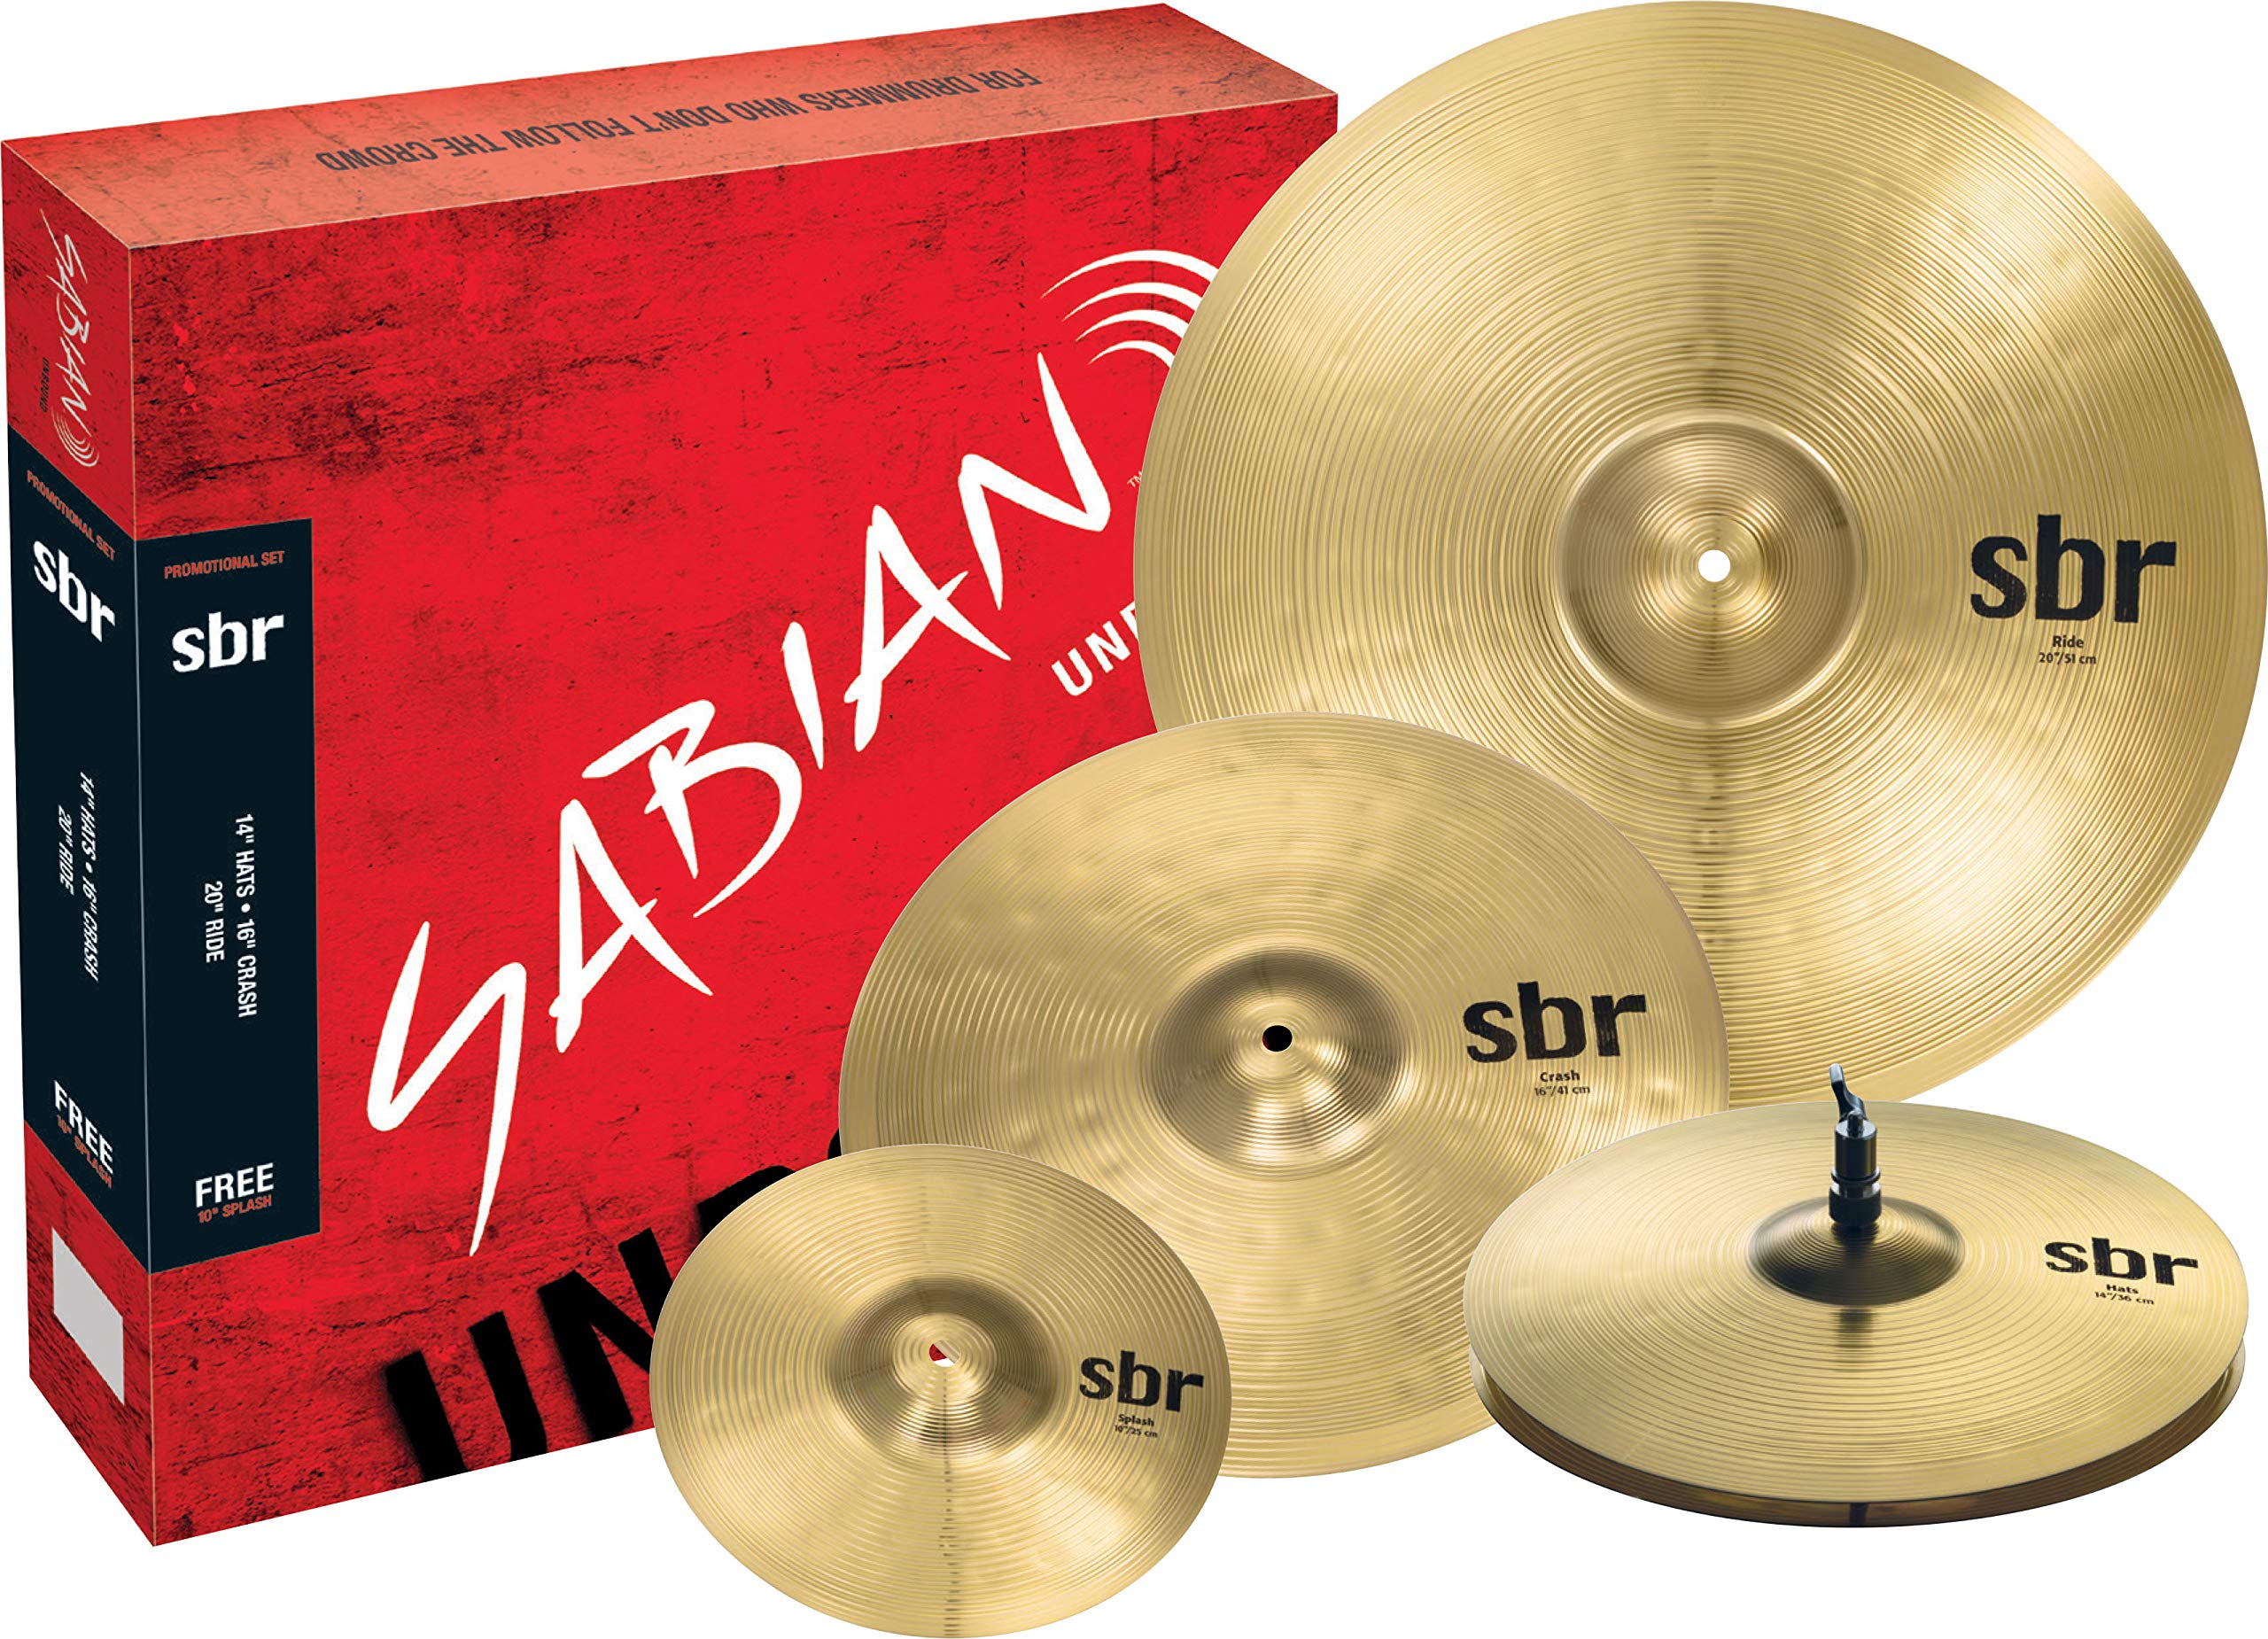 Sabian SBR Promotional Cymbal Set with Free 10